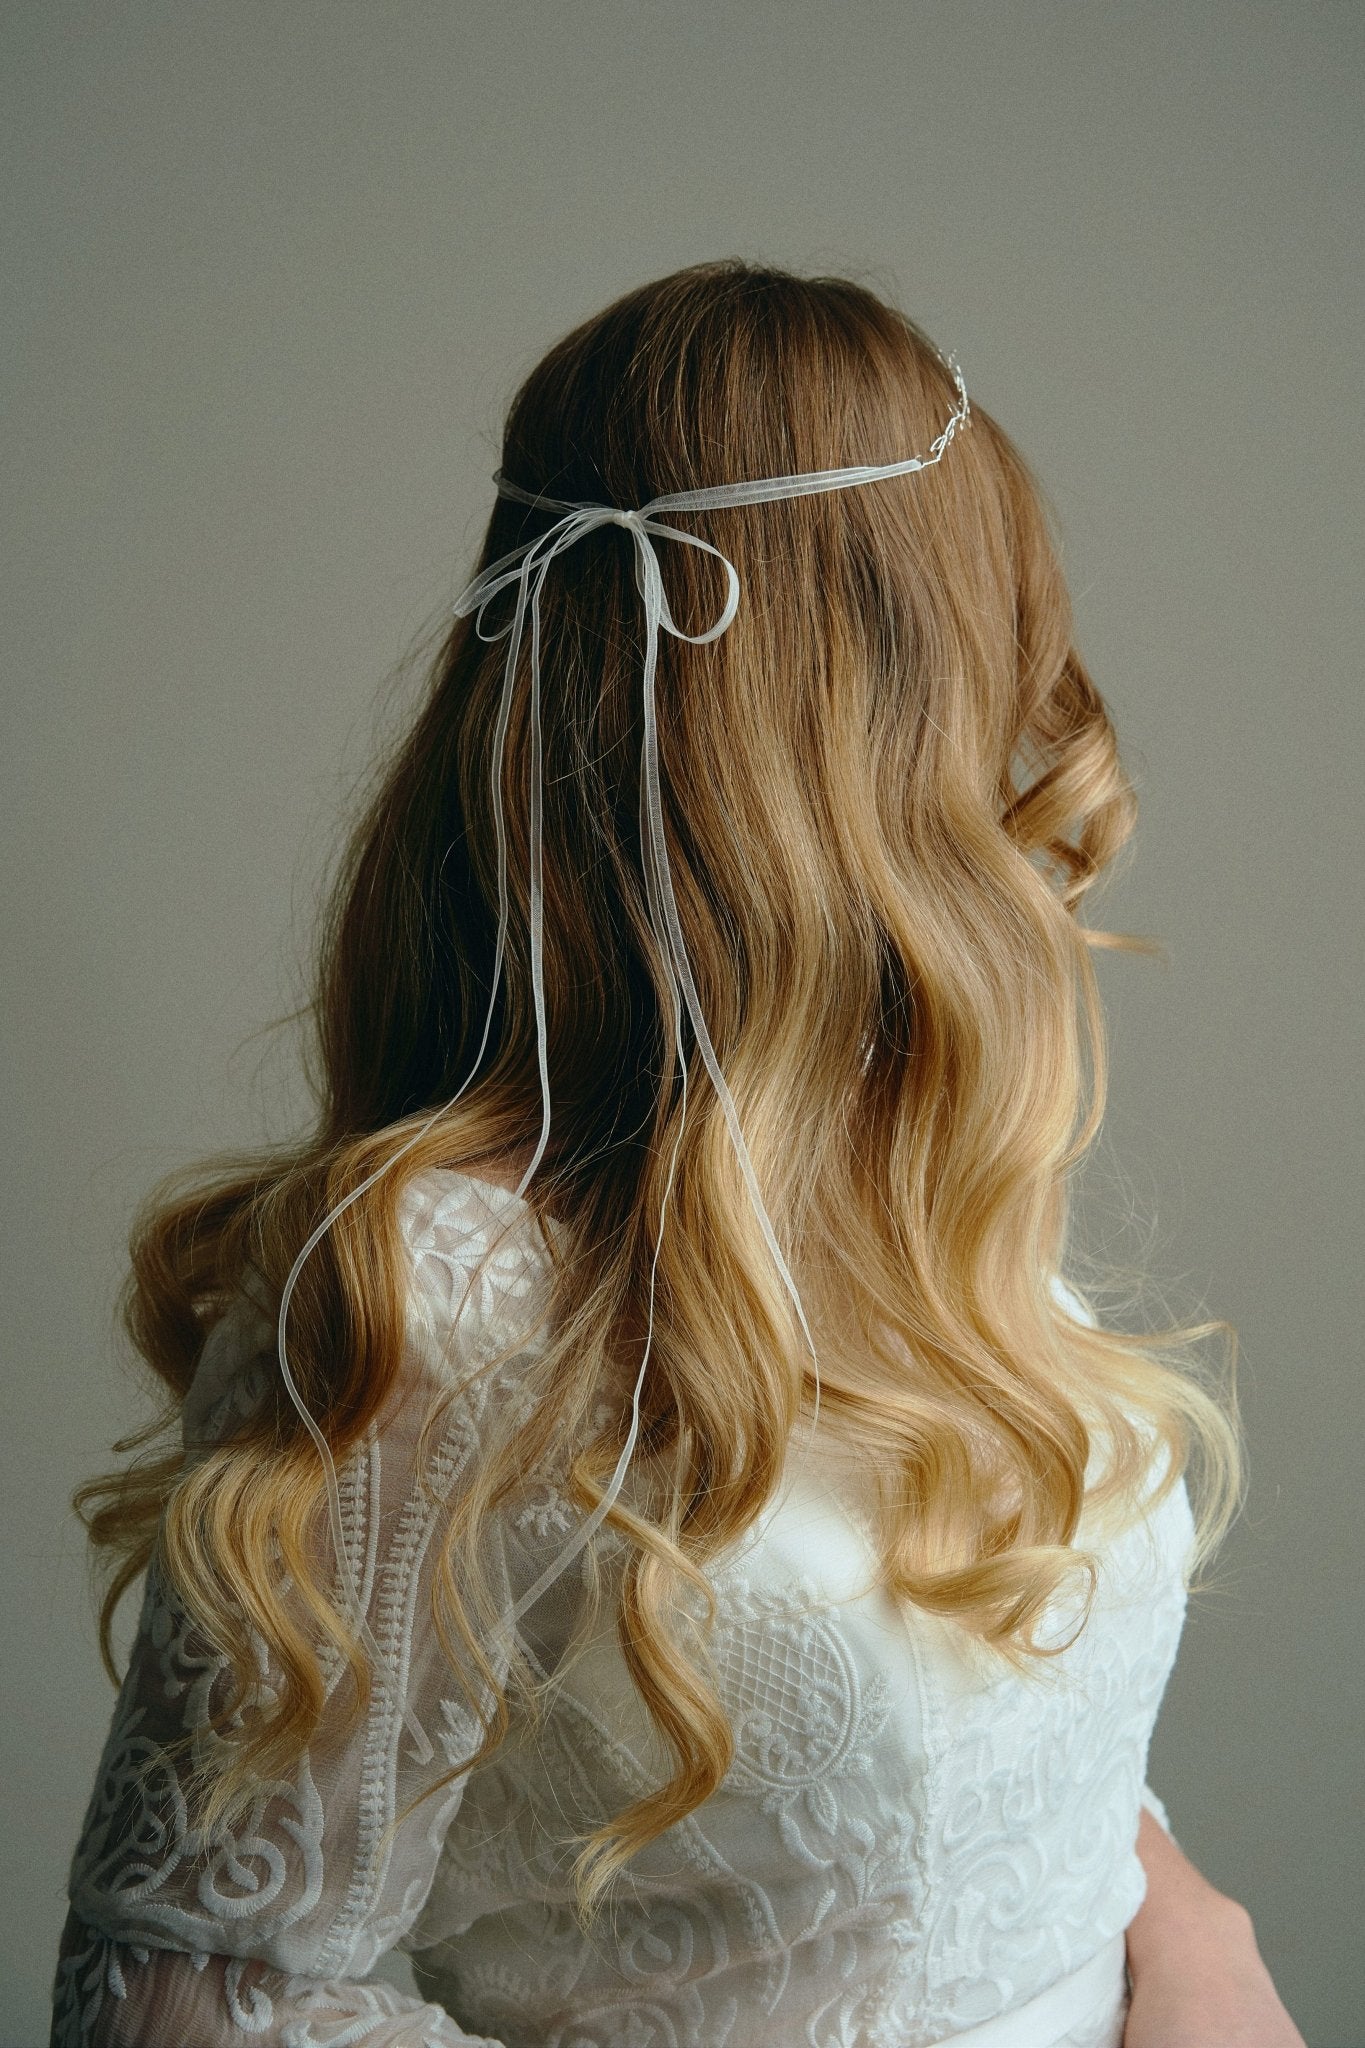 Model wears delicate silver leaf ribbon tie headband hair vine with long lose waves